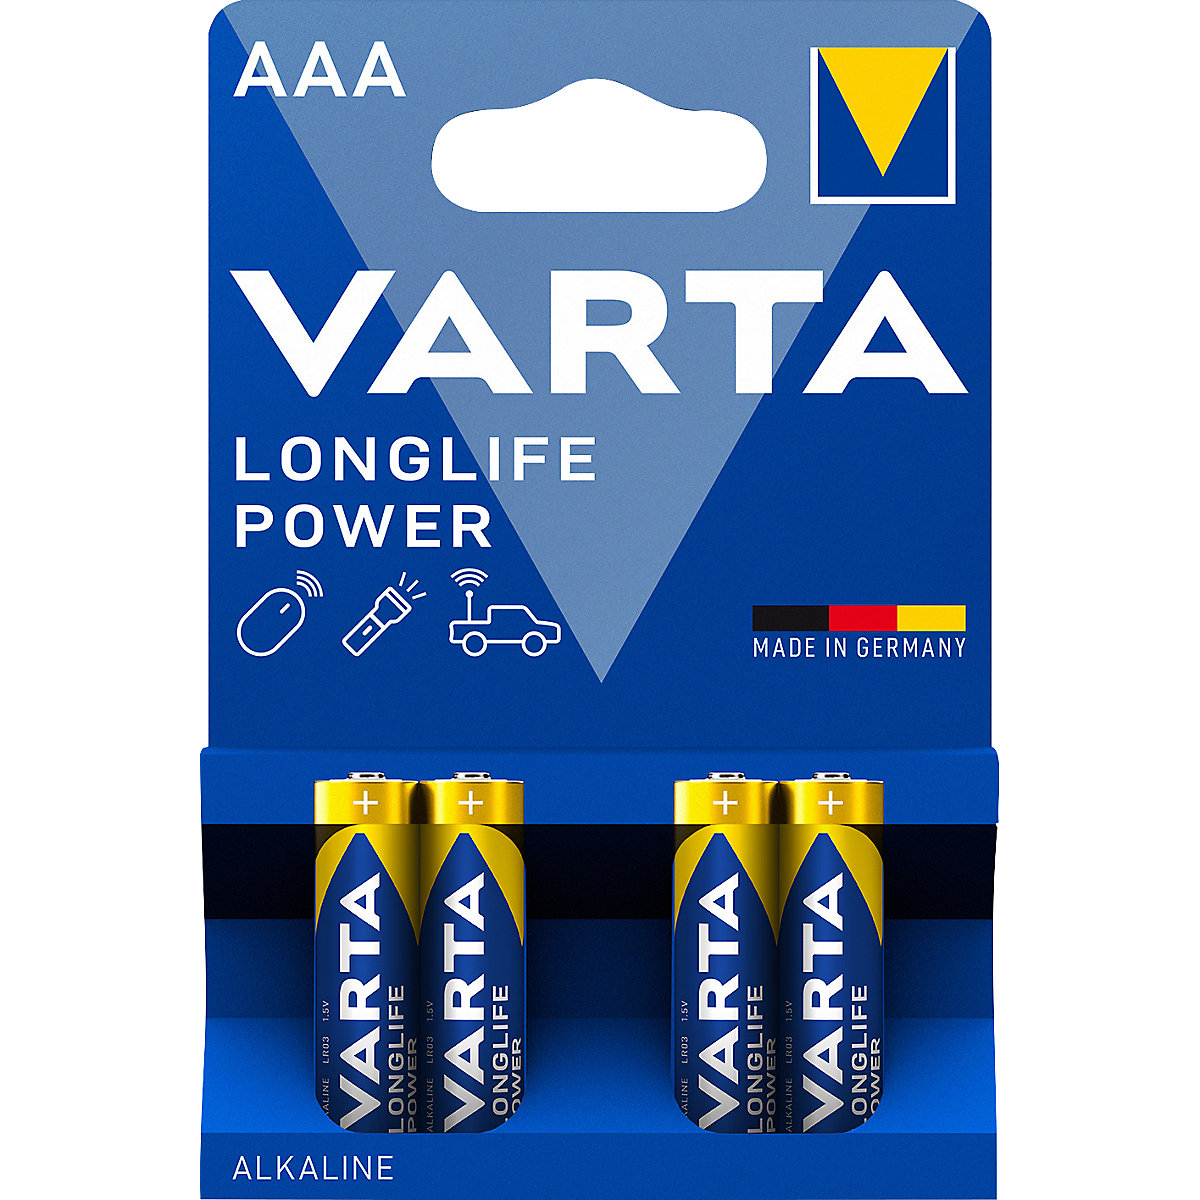 LONGLIFE power battery - VARTA